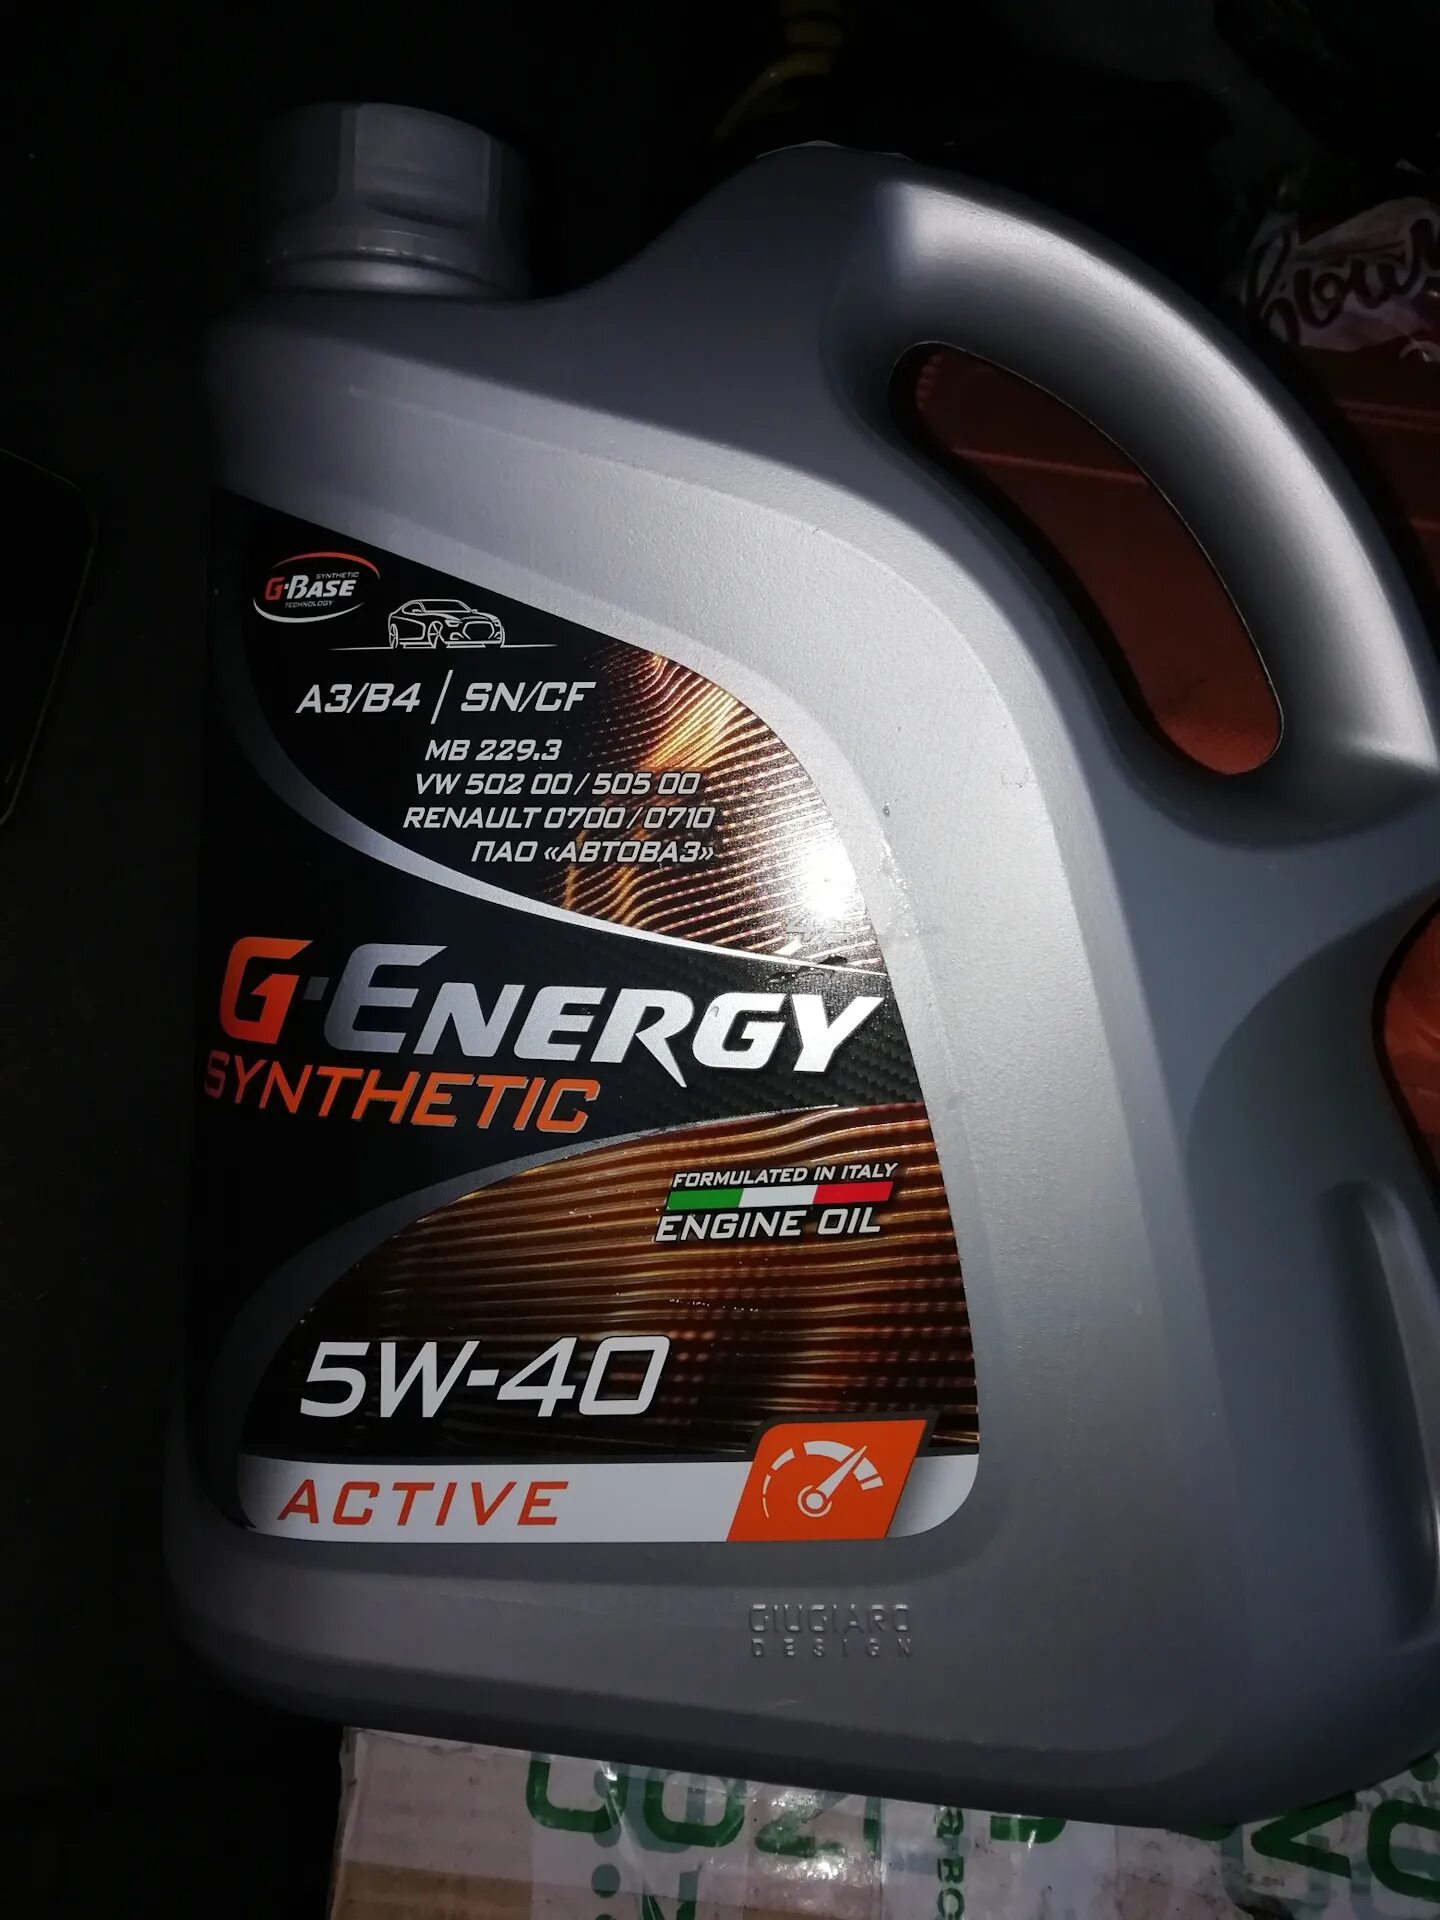 G Energy 5w40 синтетика Active. G Energy Synthetic 5w40. G-Energy Synthetic Active 5w40 4л. Масло g Energy 5w40 синтетика Актив. Подлинность g energy